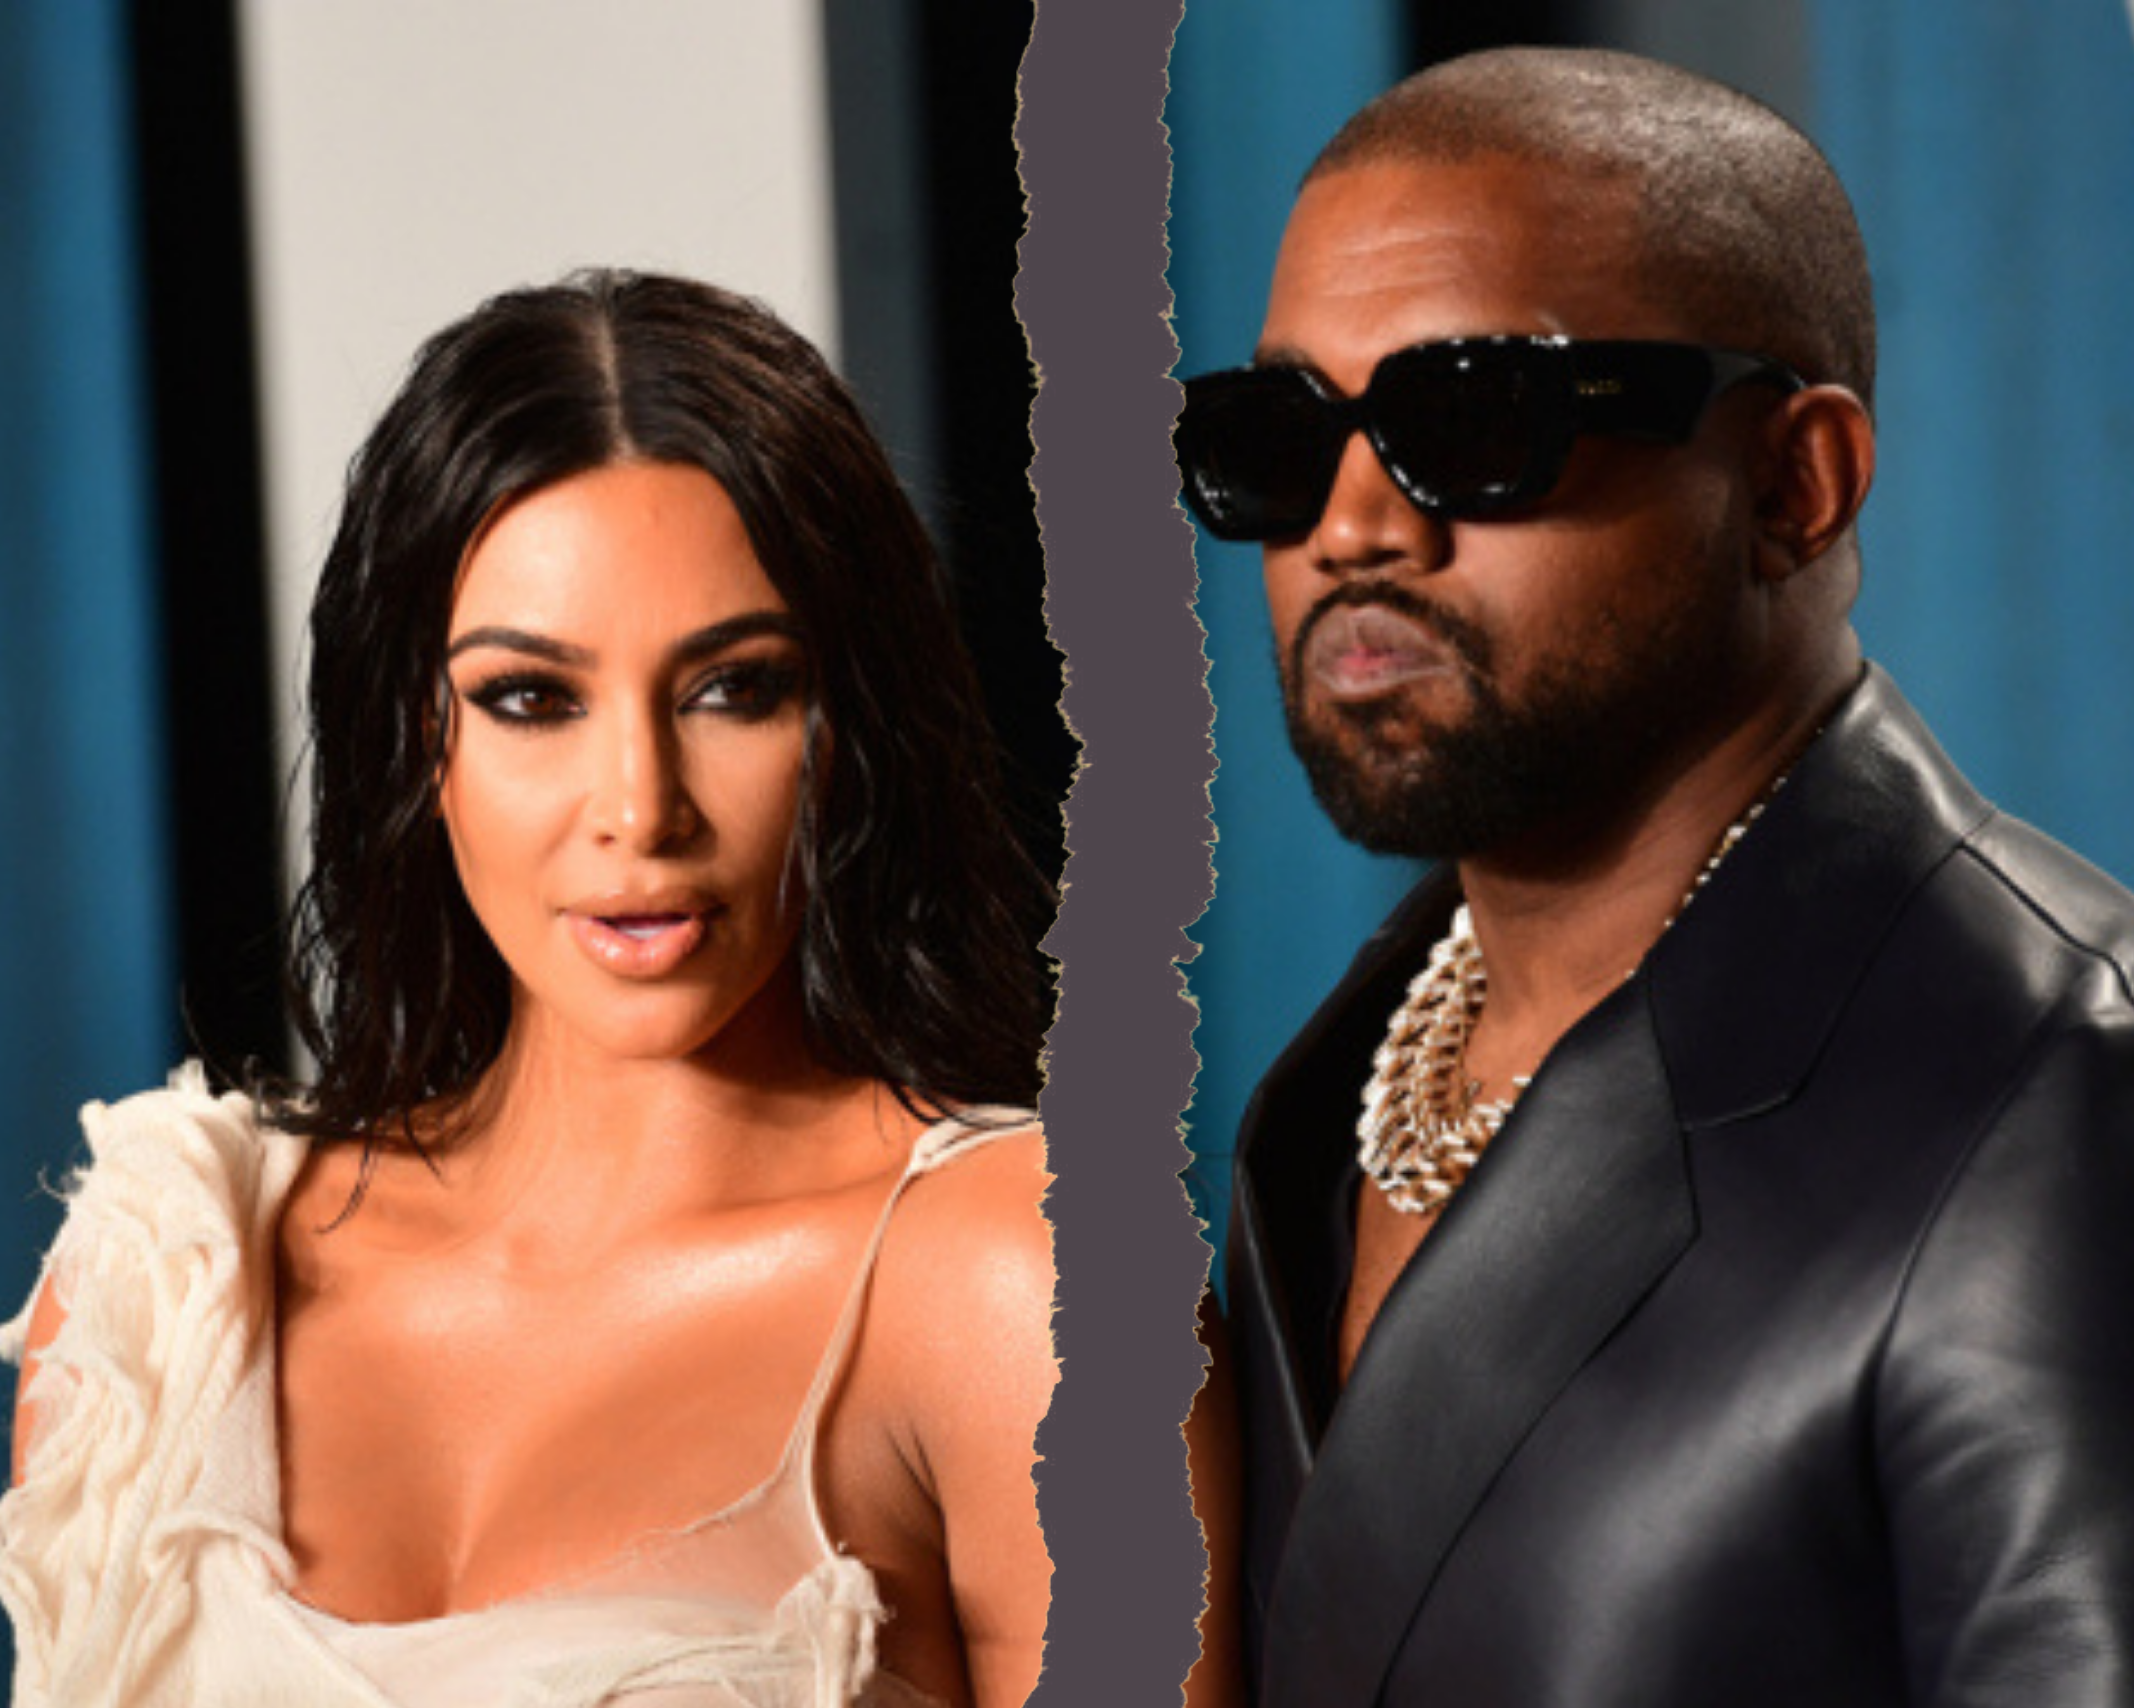 Kim Kardashian and Kanye West are calling it quits